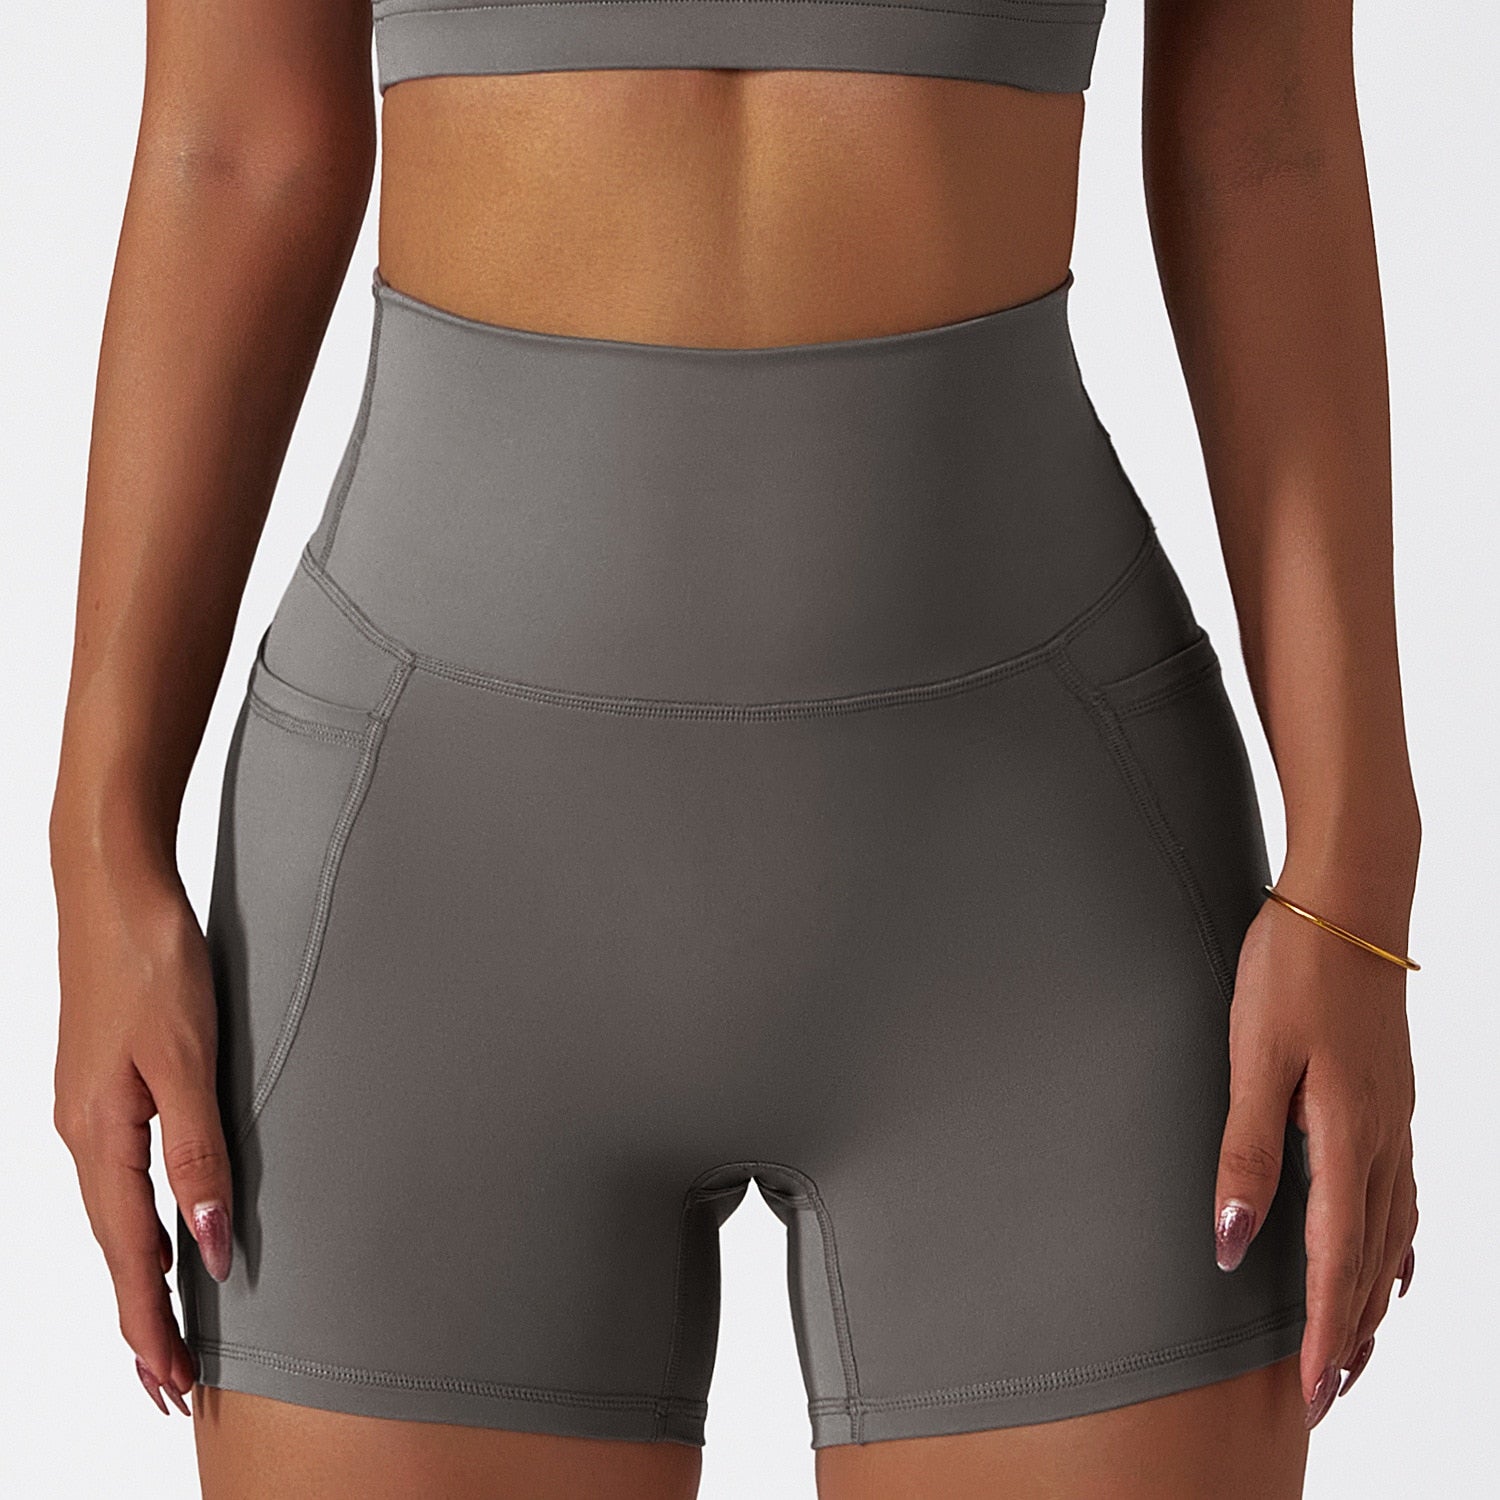 Comprar gray Comfortable Skin Friendly High Waist Yoga Shorts